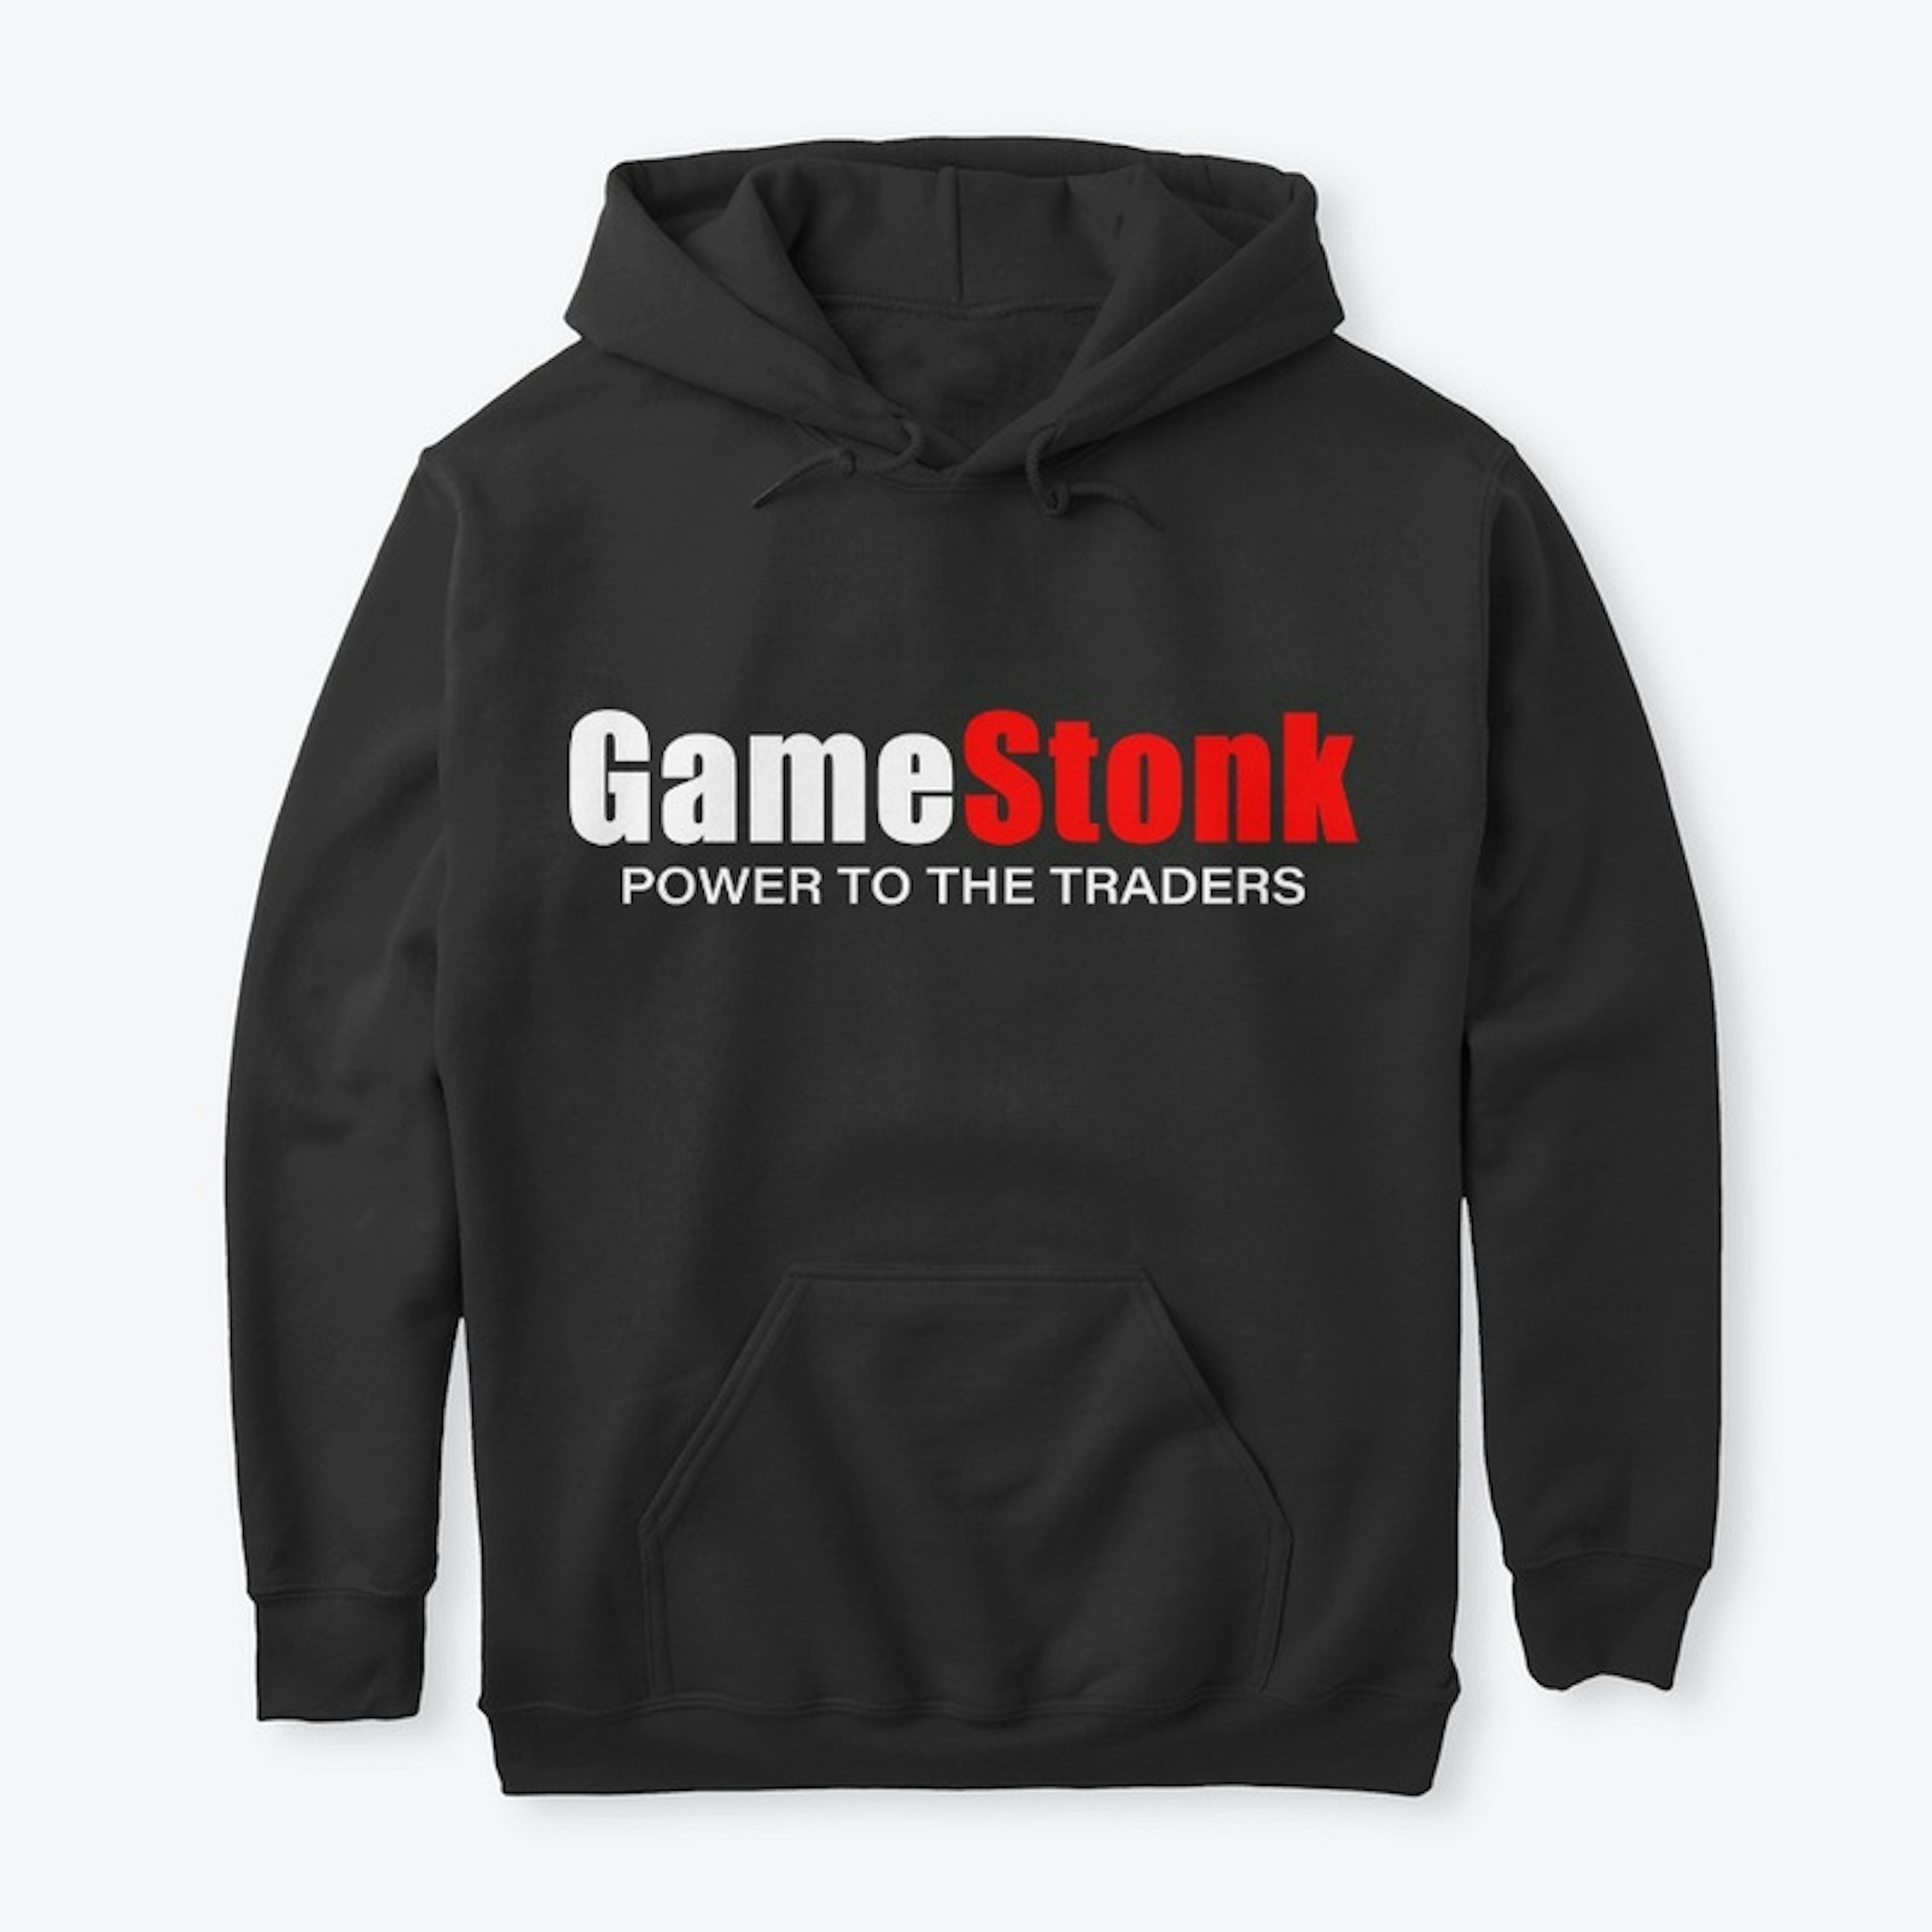 GameStonk